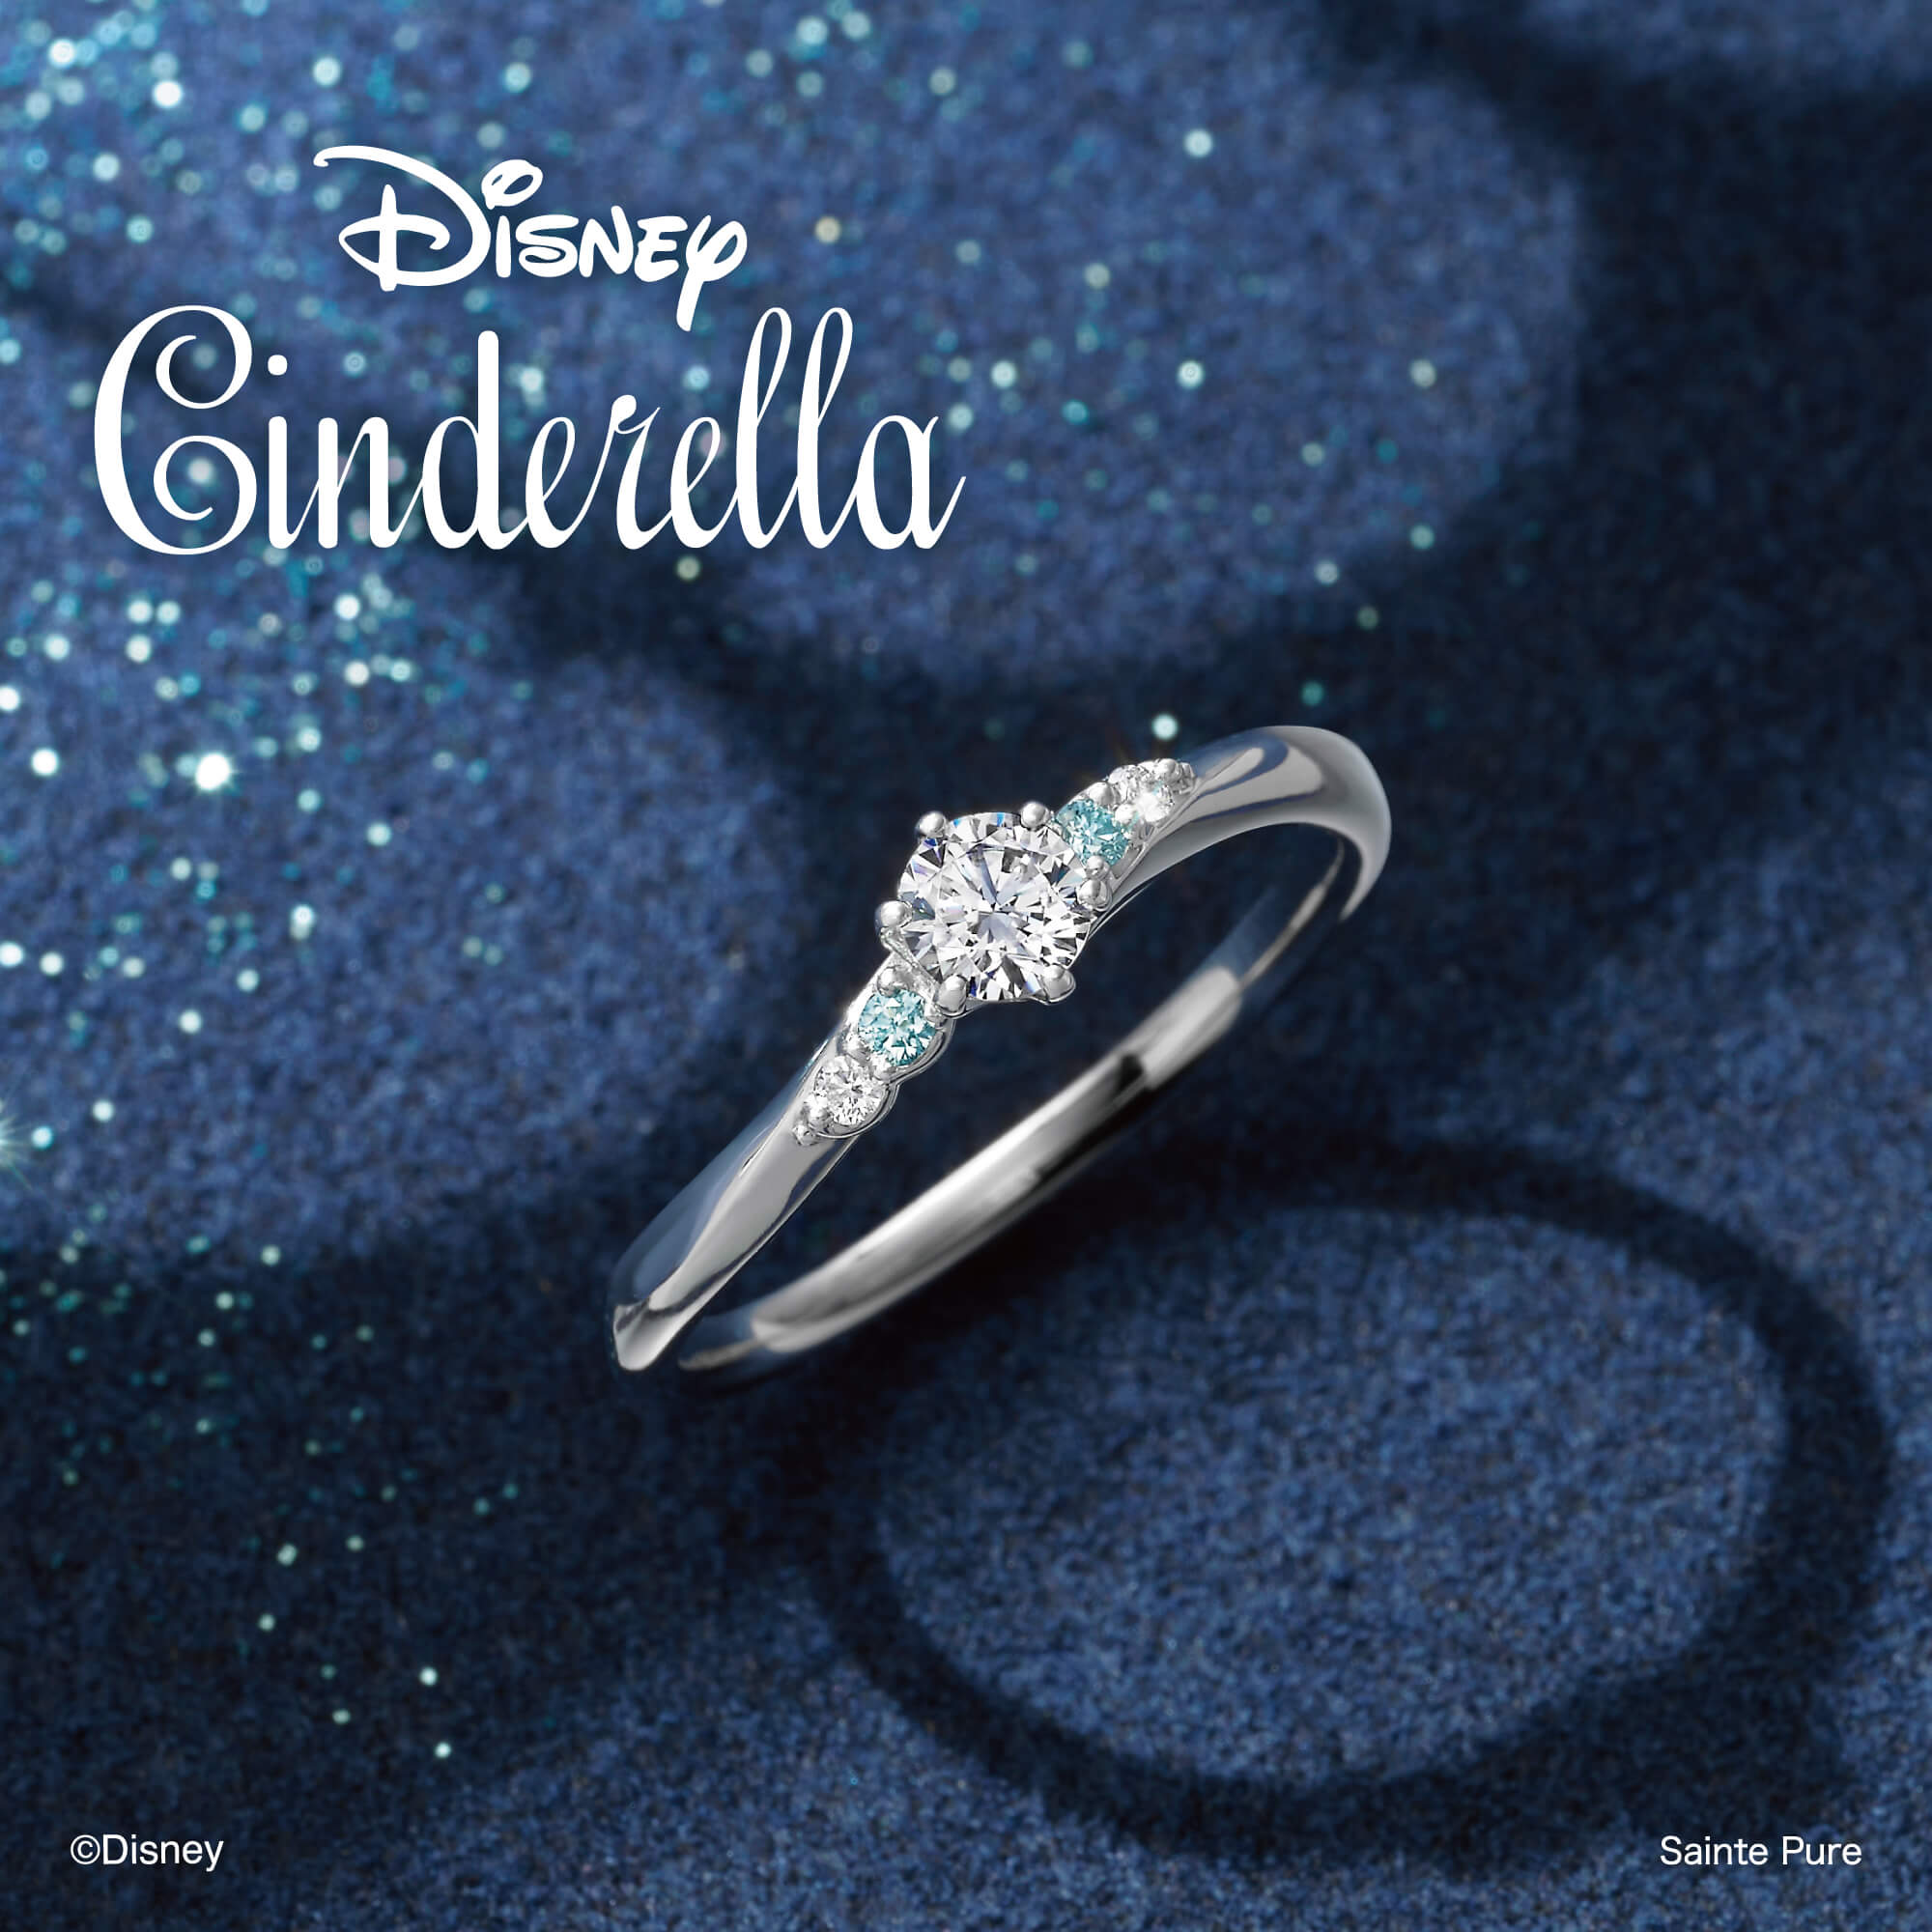 DisneyCinderellaディズニーシンデレラの婚約指輪エンゲージリングEngagementringのMidnightMagicミッドナイトマジック